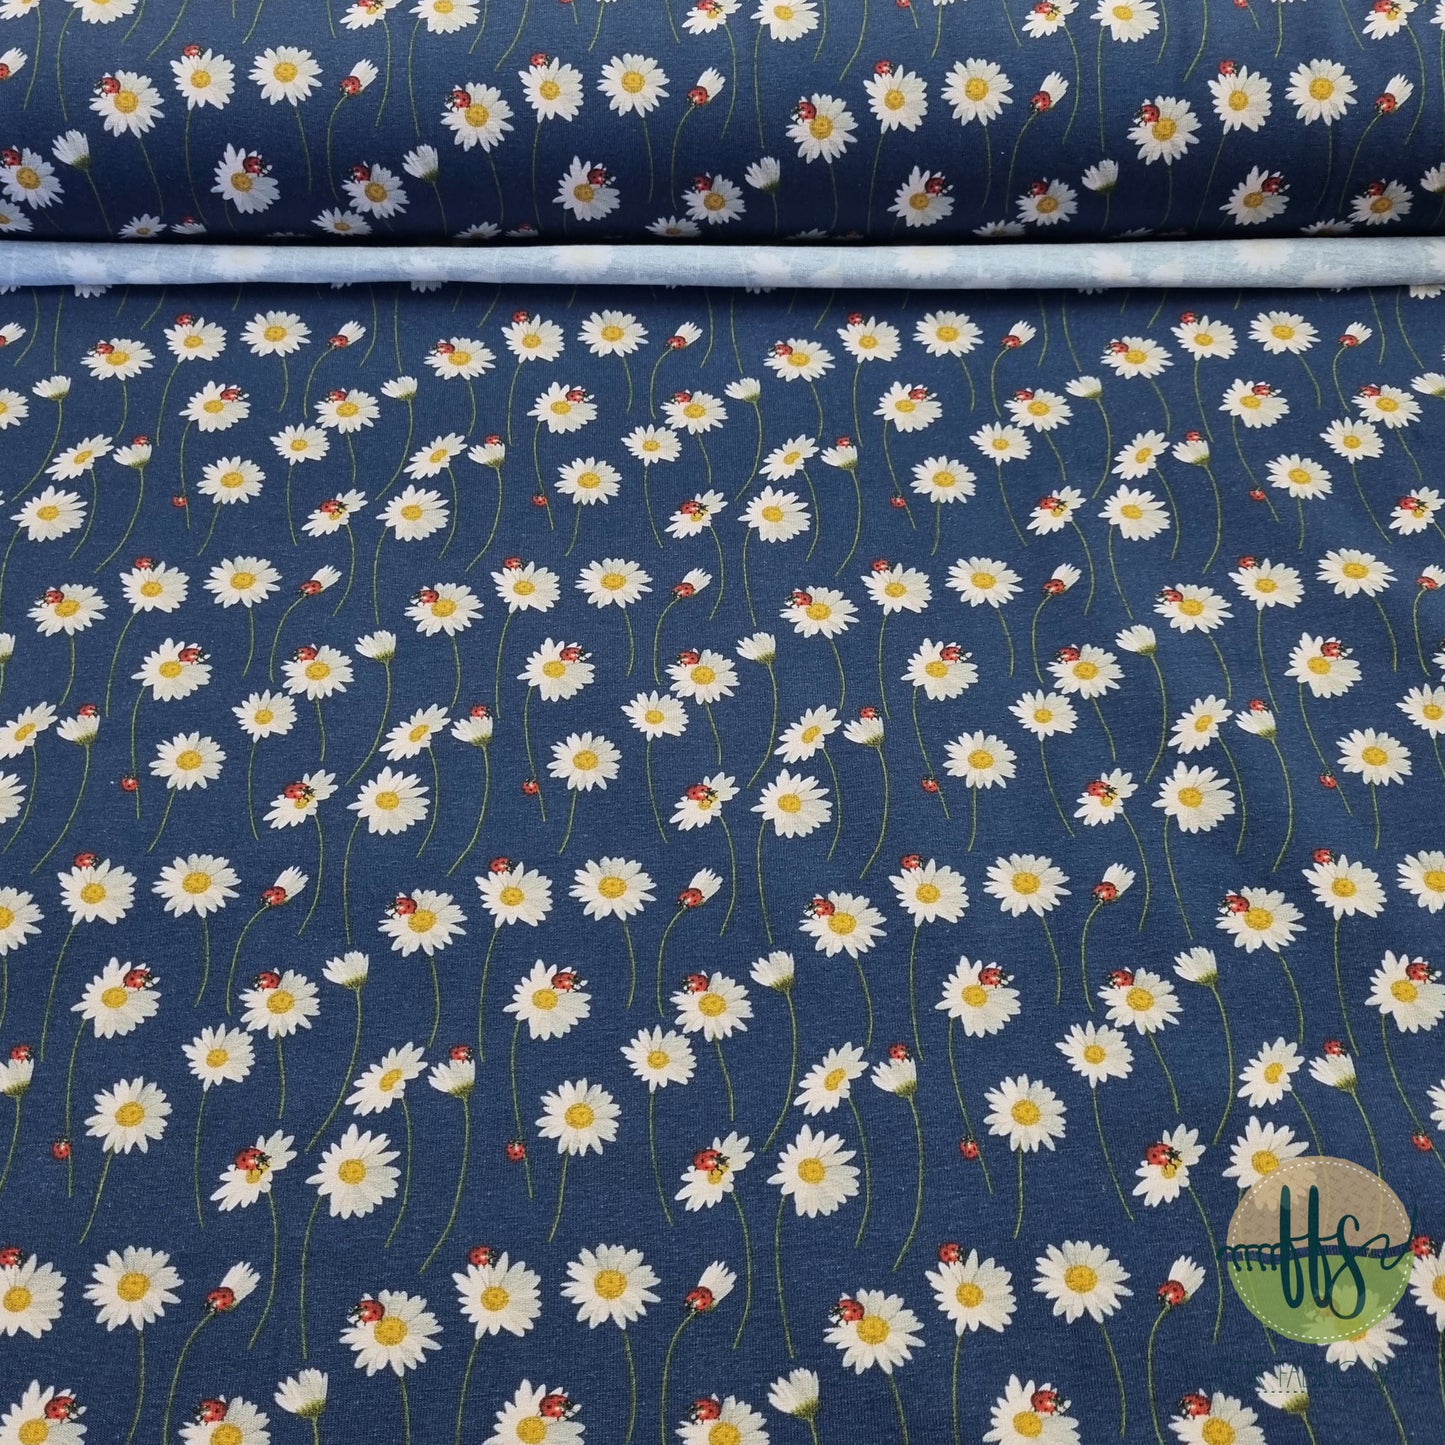 Ladybugs love daisies Navy- Cotton Spandex 215g